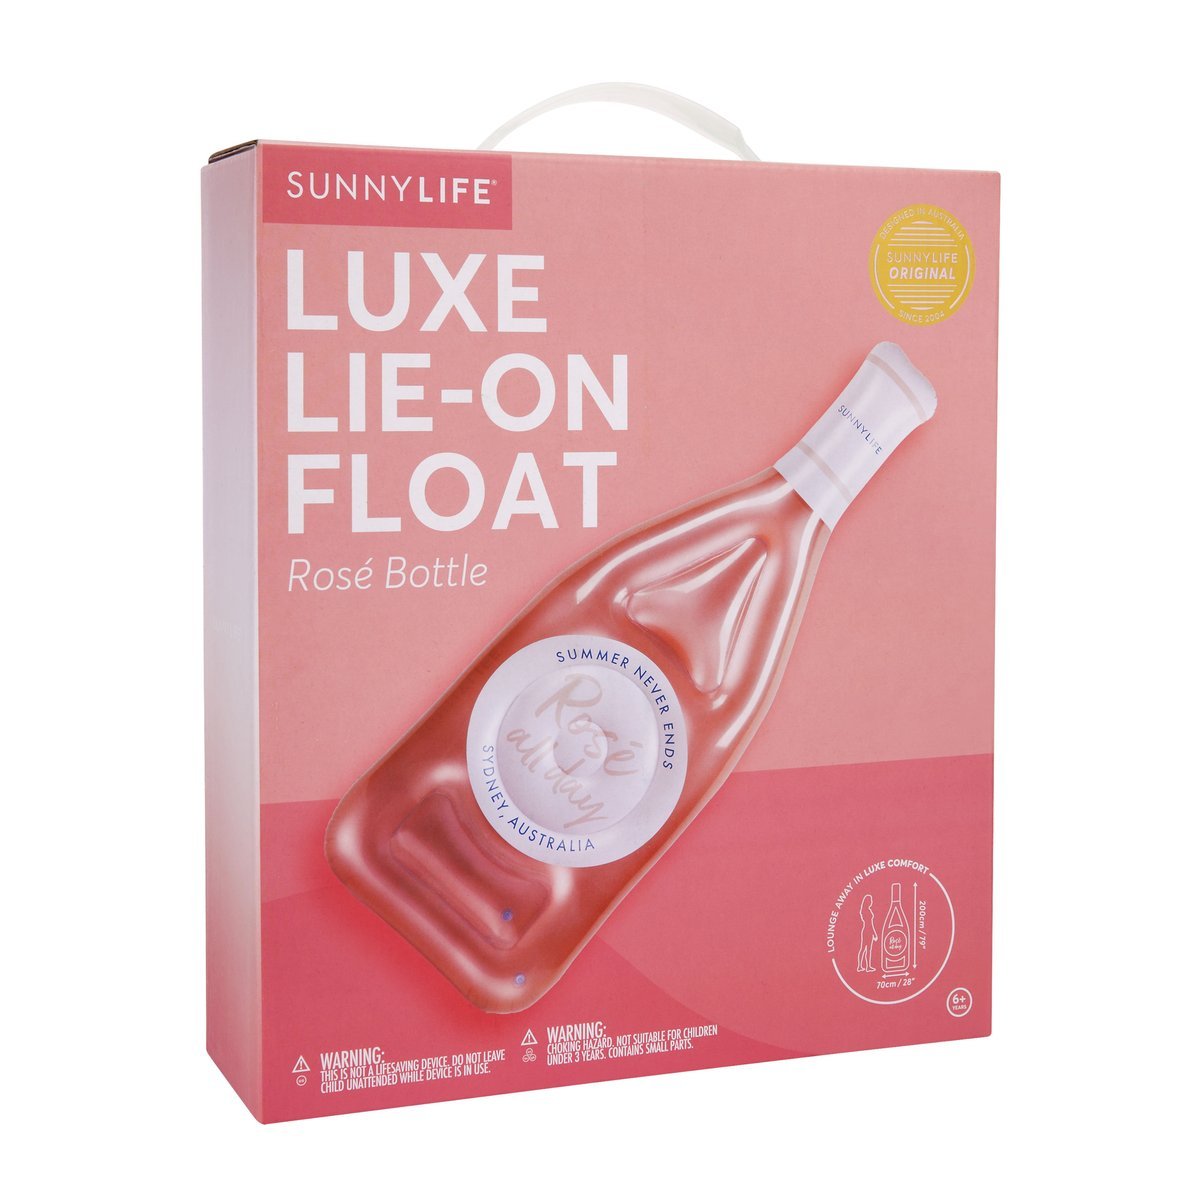 LUXE LIE-ON FLOAT ROSE BOTTLE